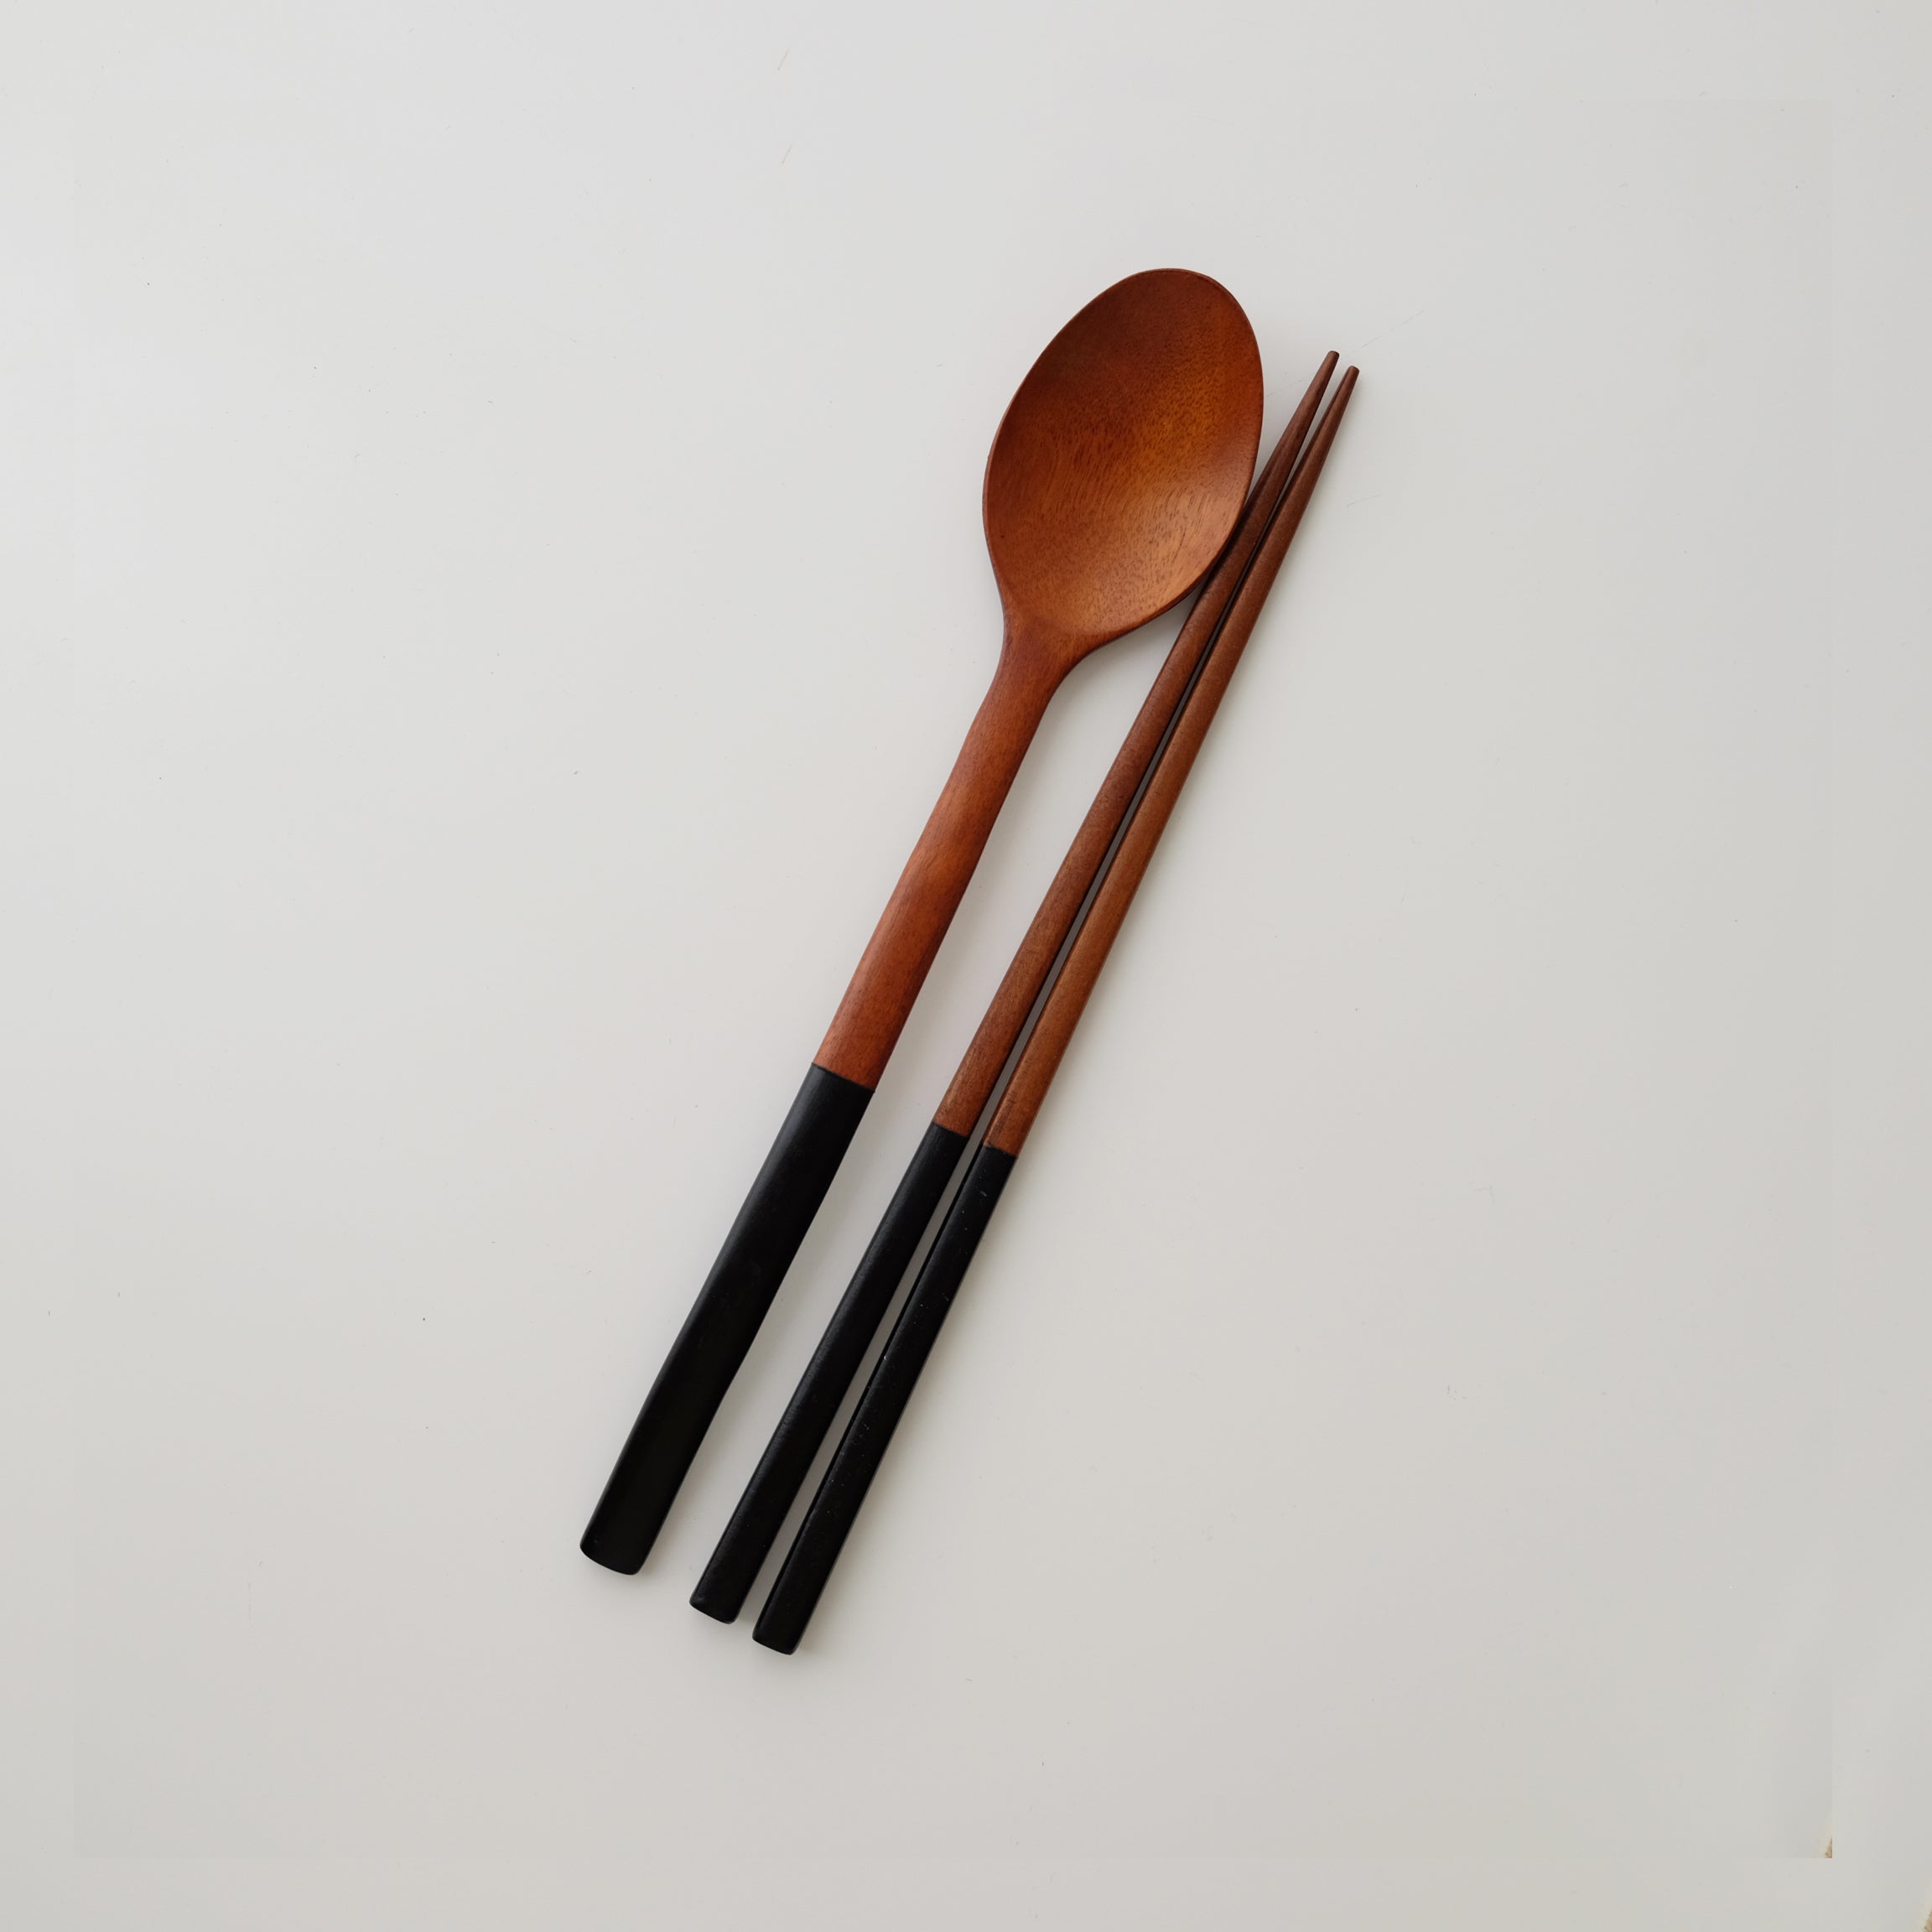 Jujube Wood Spoon and Chopsticks